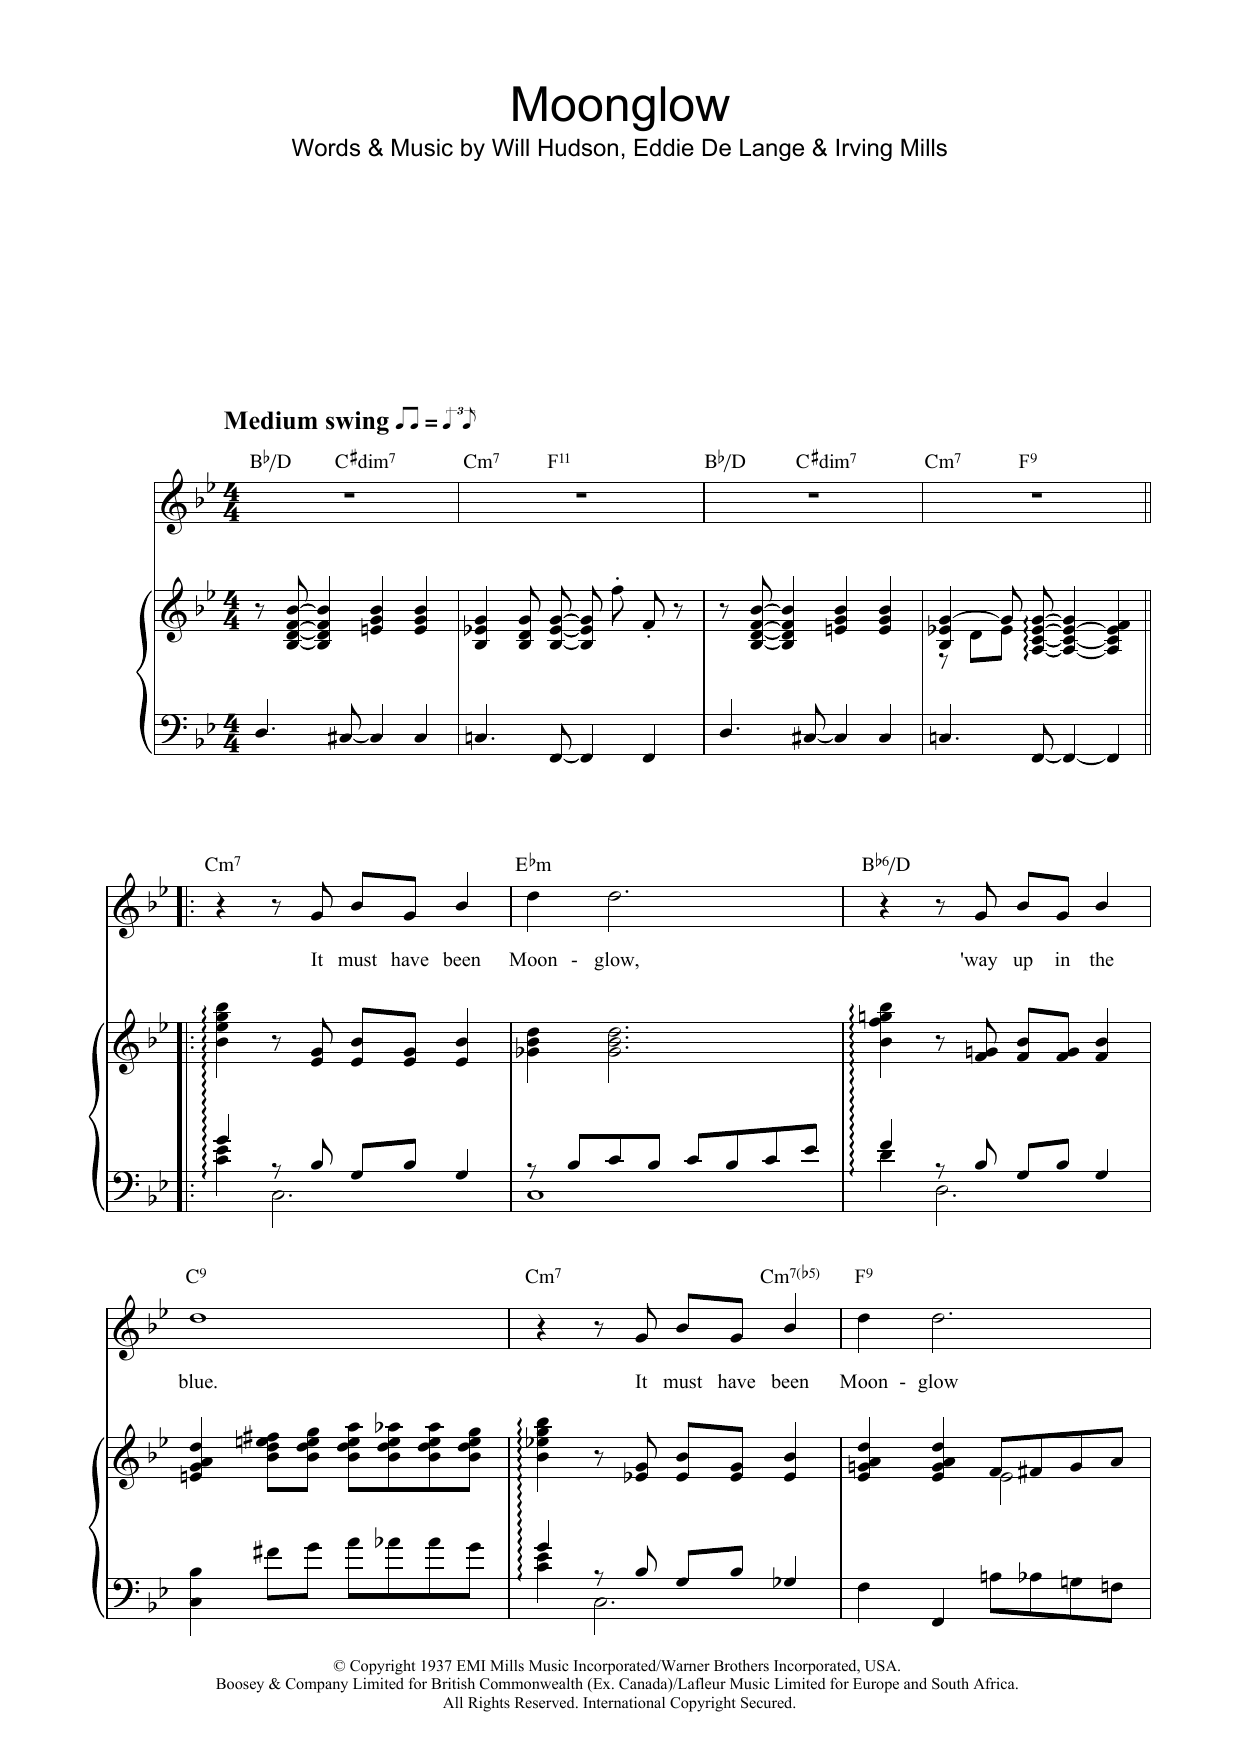 Irving Mills Moonglow Sheet Music Notes & Chords for Ukulele - Download or Print PDF